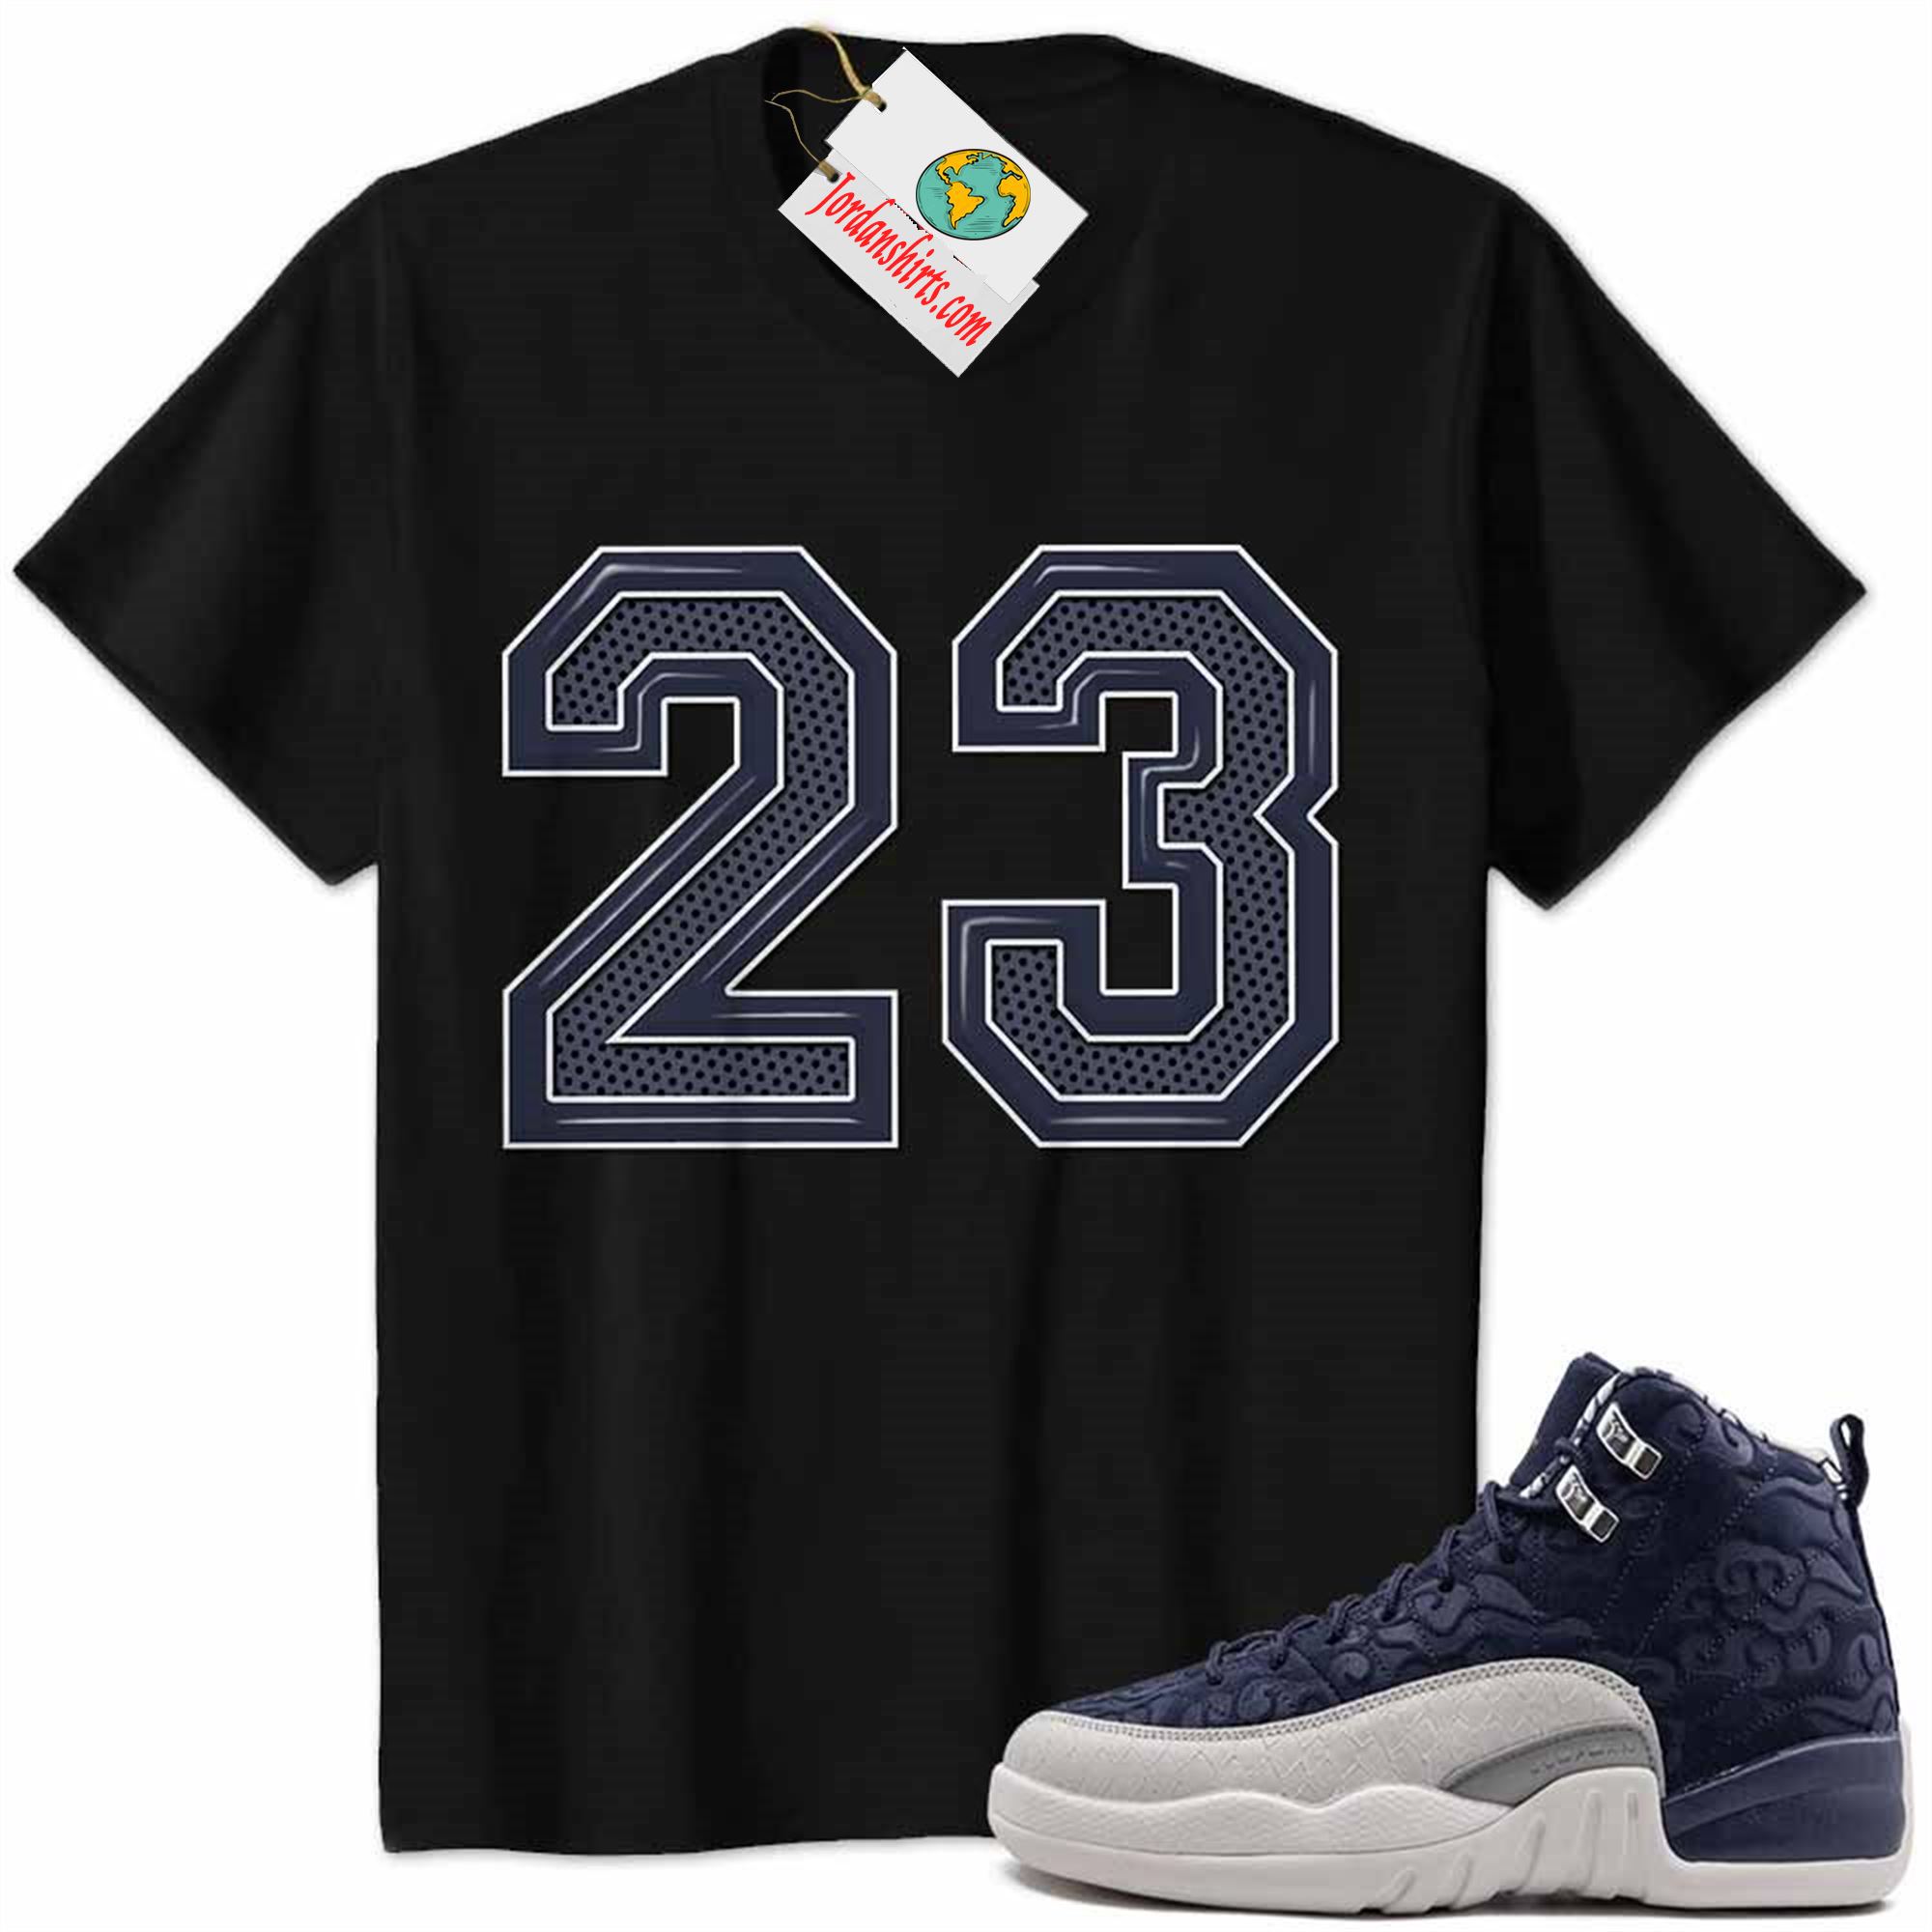 Jordan 12 Shirt, Jordan 12 International Flight Shirt Michael Jordan Number 23 Black Full Size Up To 5xl